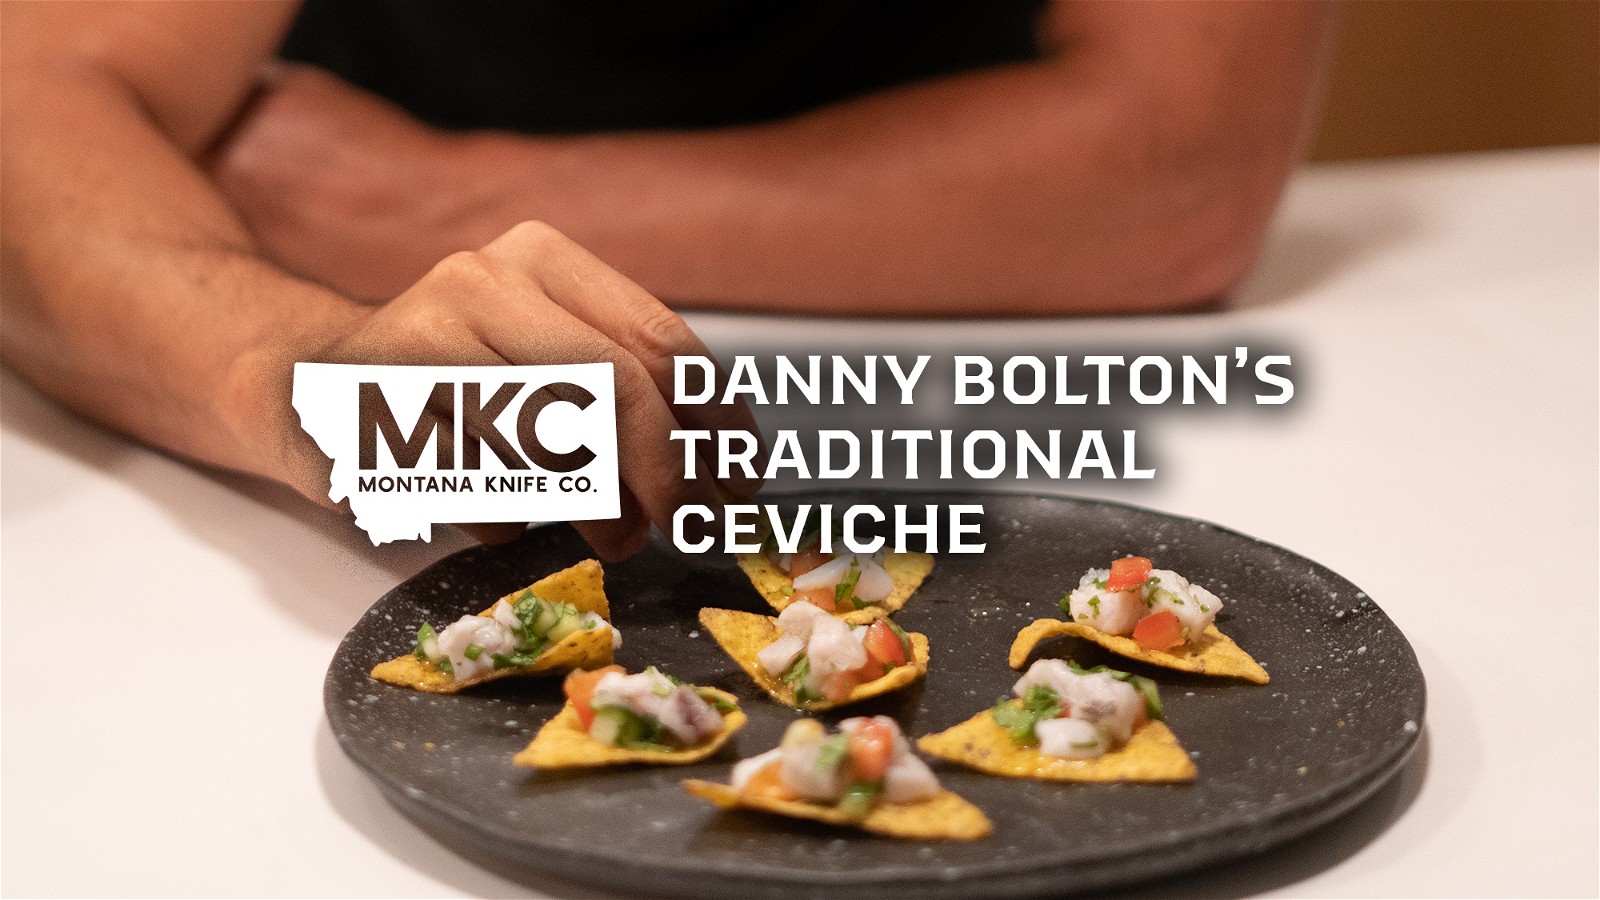 Image of Danny Bolton’s Traditional Ceviche